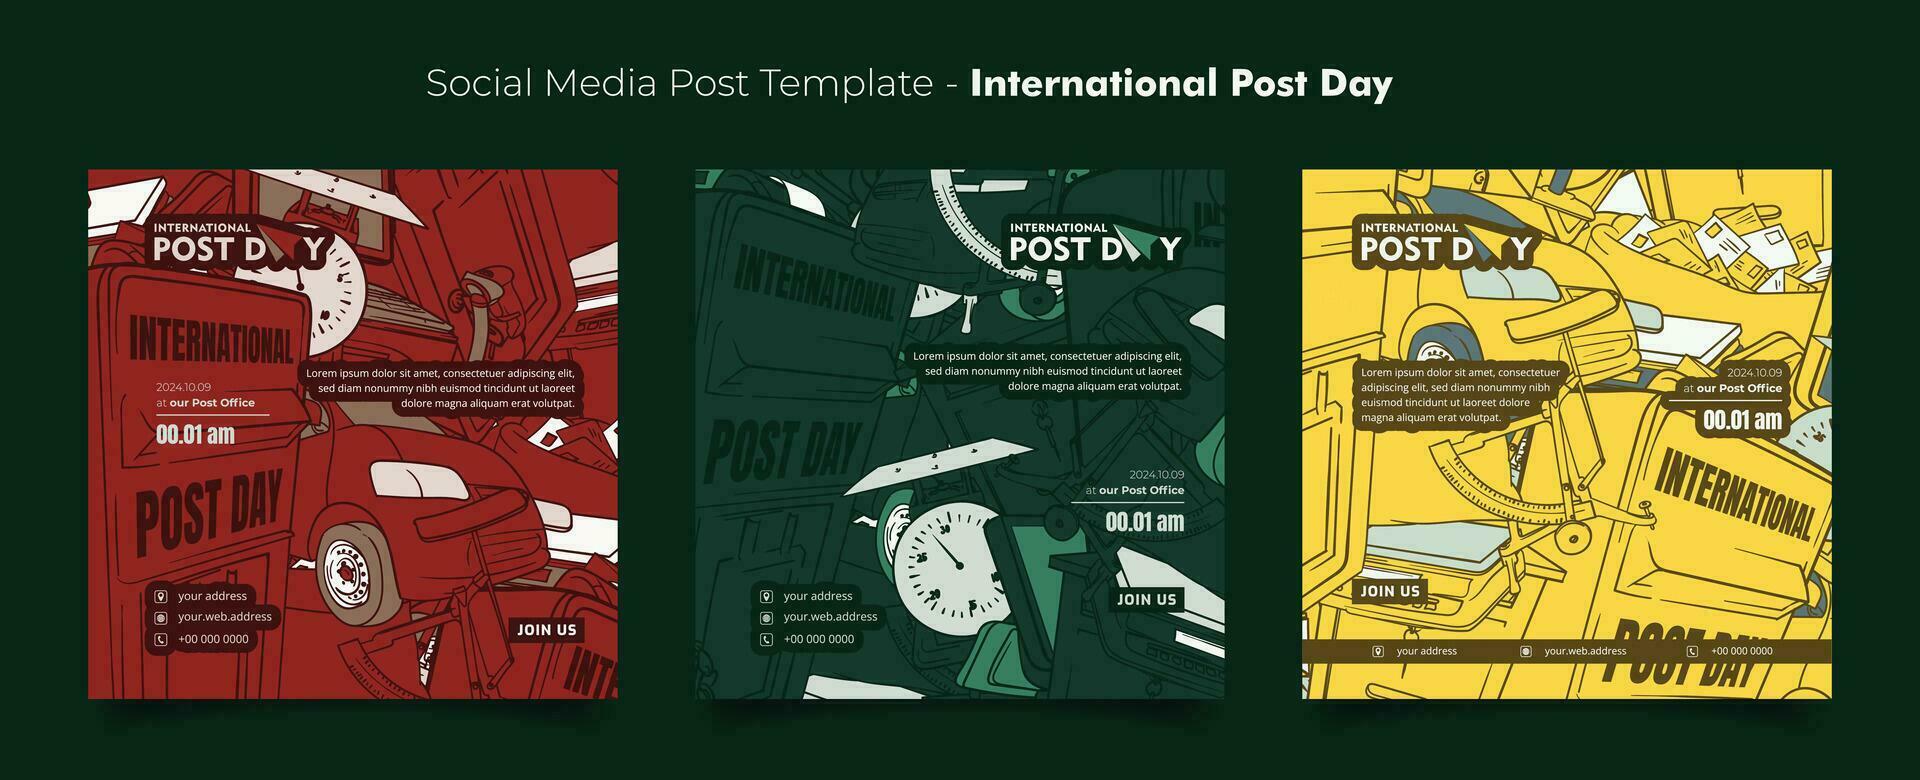 reeks van sociaal media post sjabloon met tekening kunst van post- achtergrond voor wereld post dag campagne vector